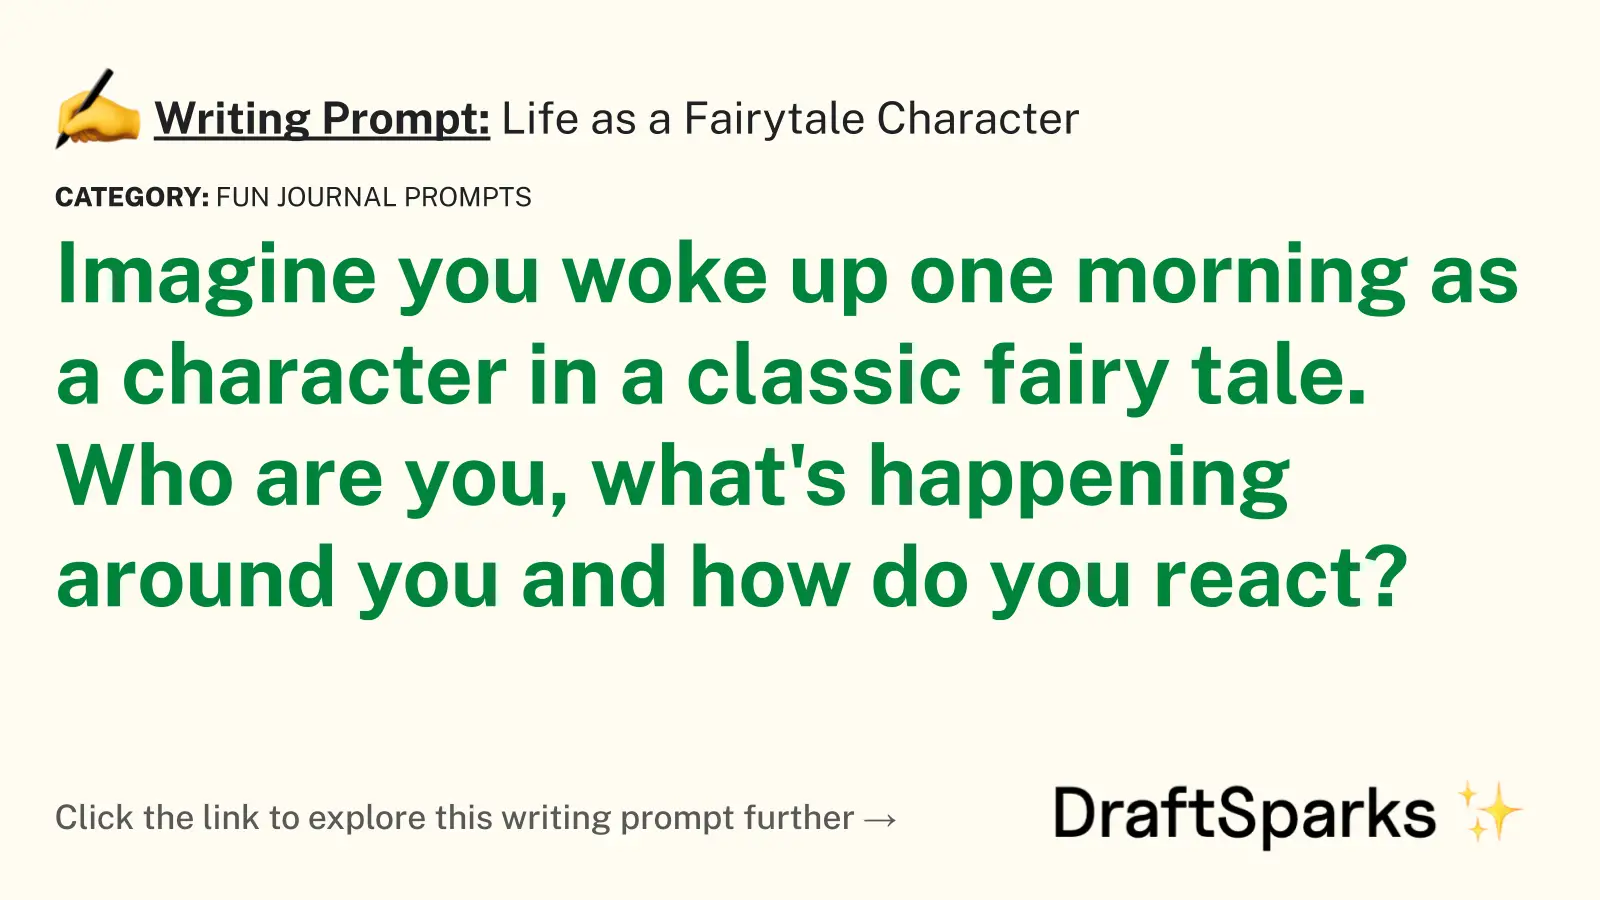 Life as a Fairytale Character